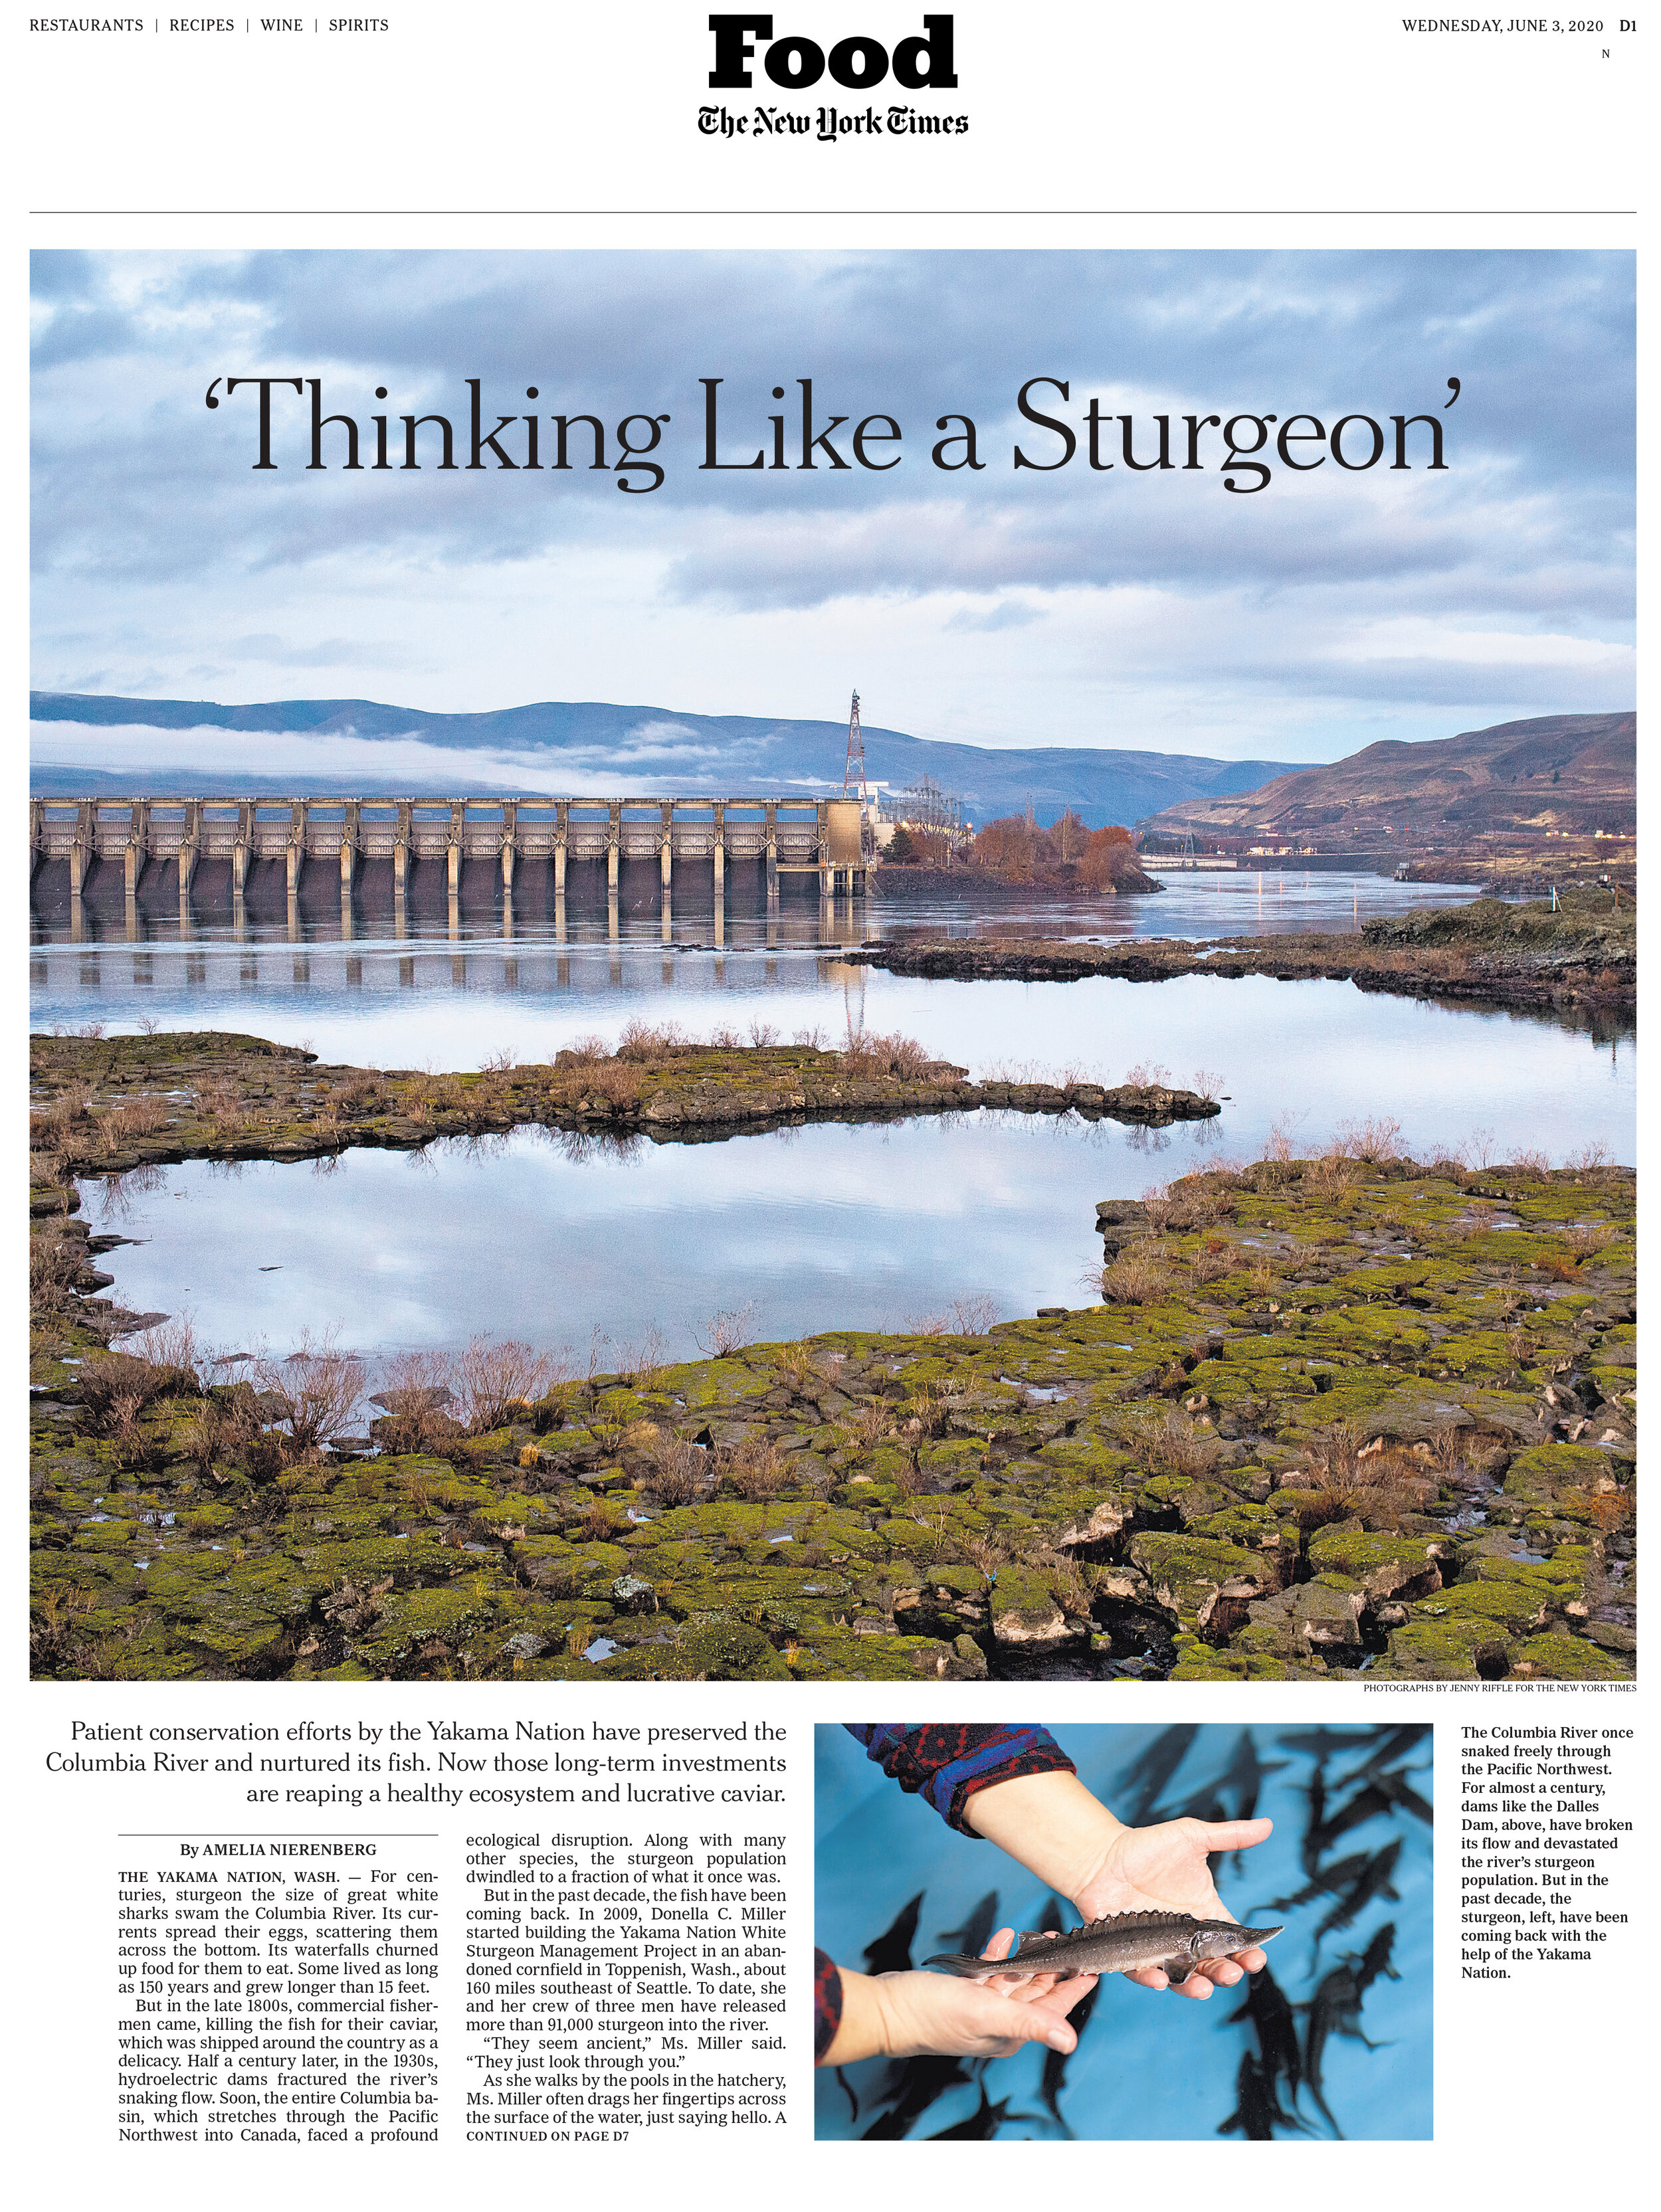 Yakima Nation Sturgeon Hatchery for The New York Times